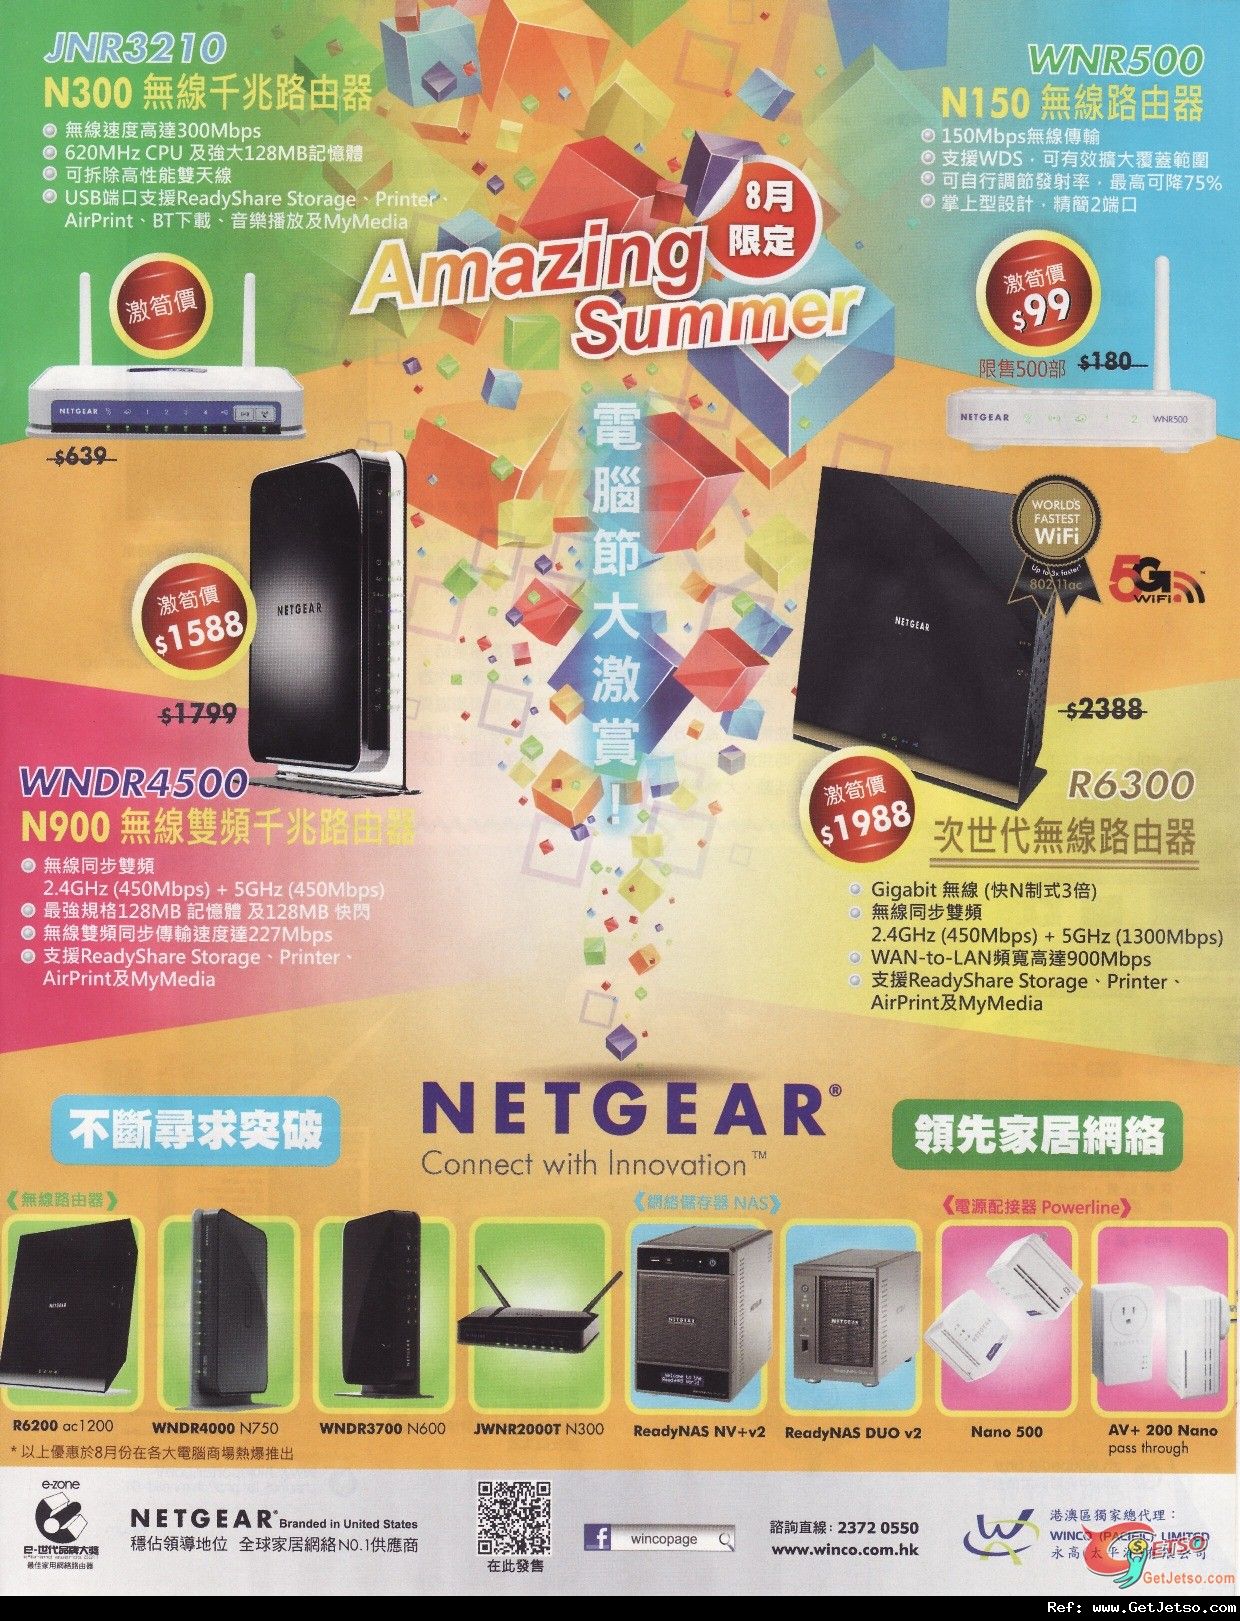 NETGEAR 電腦網絡設備購買優惠@電腦通訊節2012圖片1